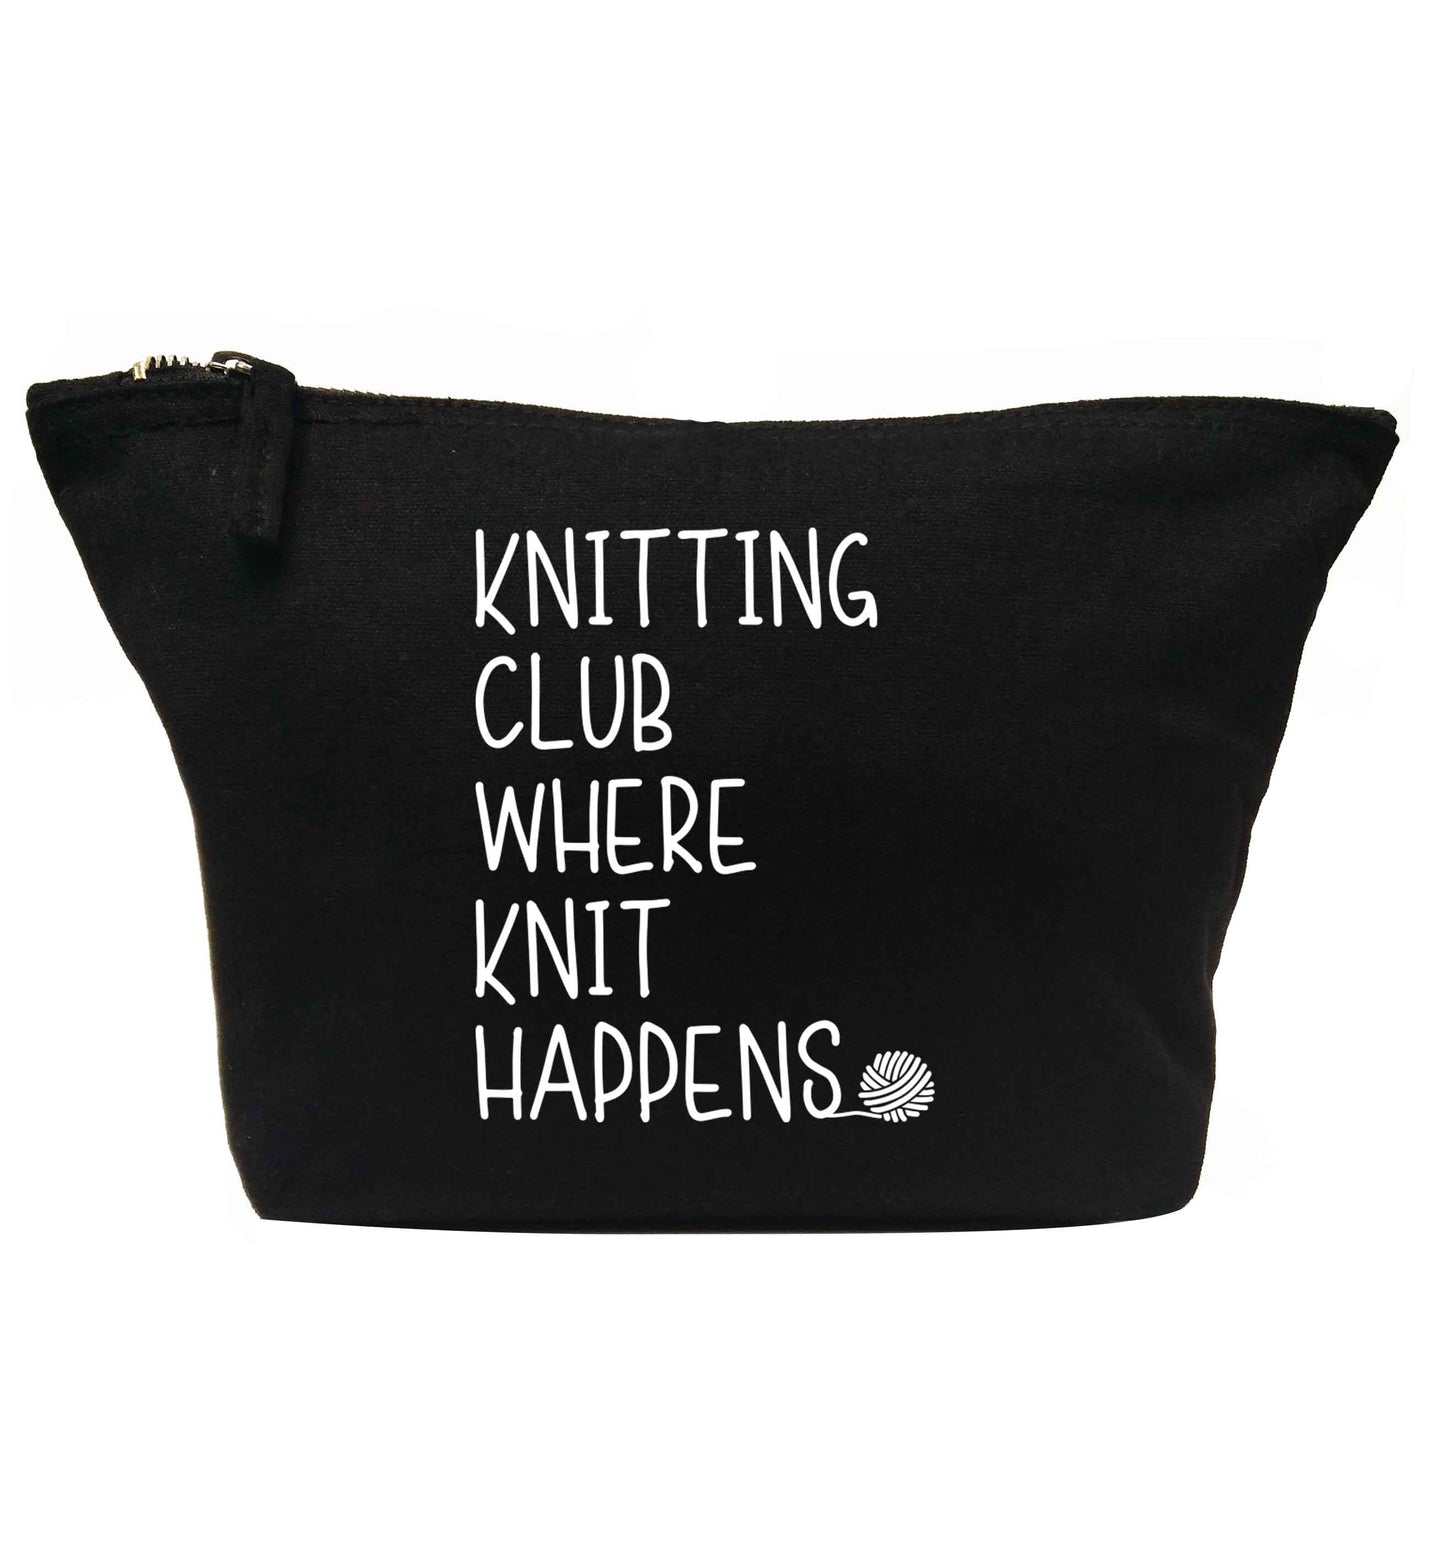 Knitting club where knit happens | Makeup / wash bag